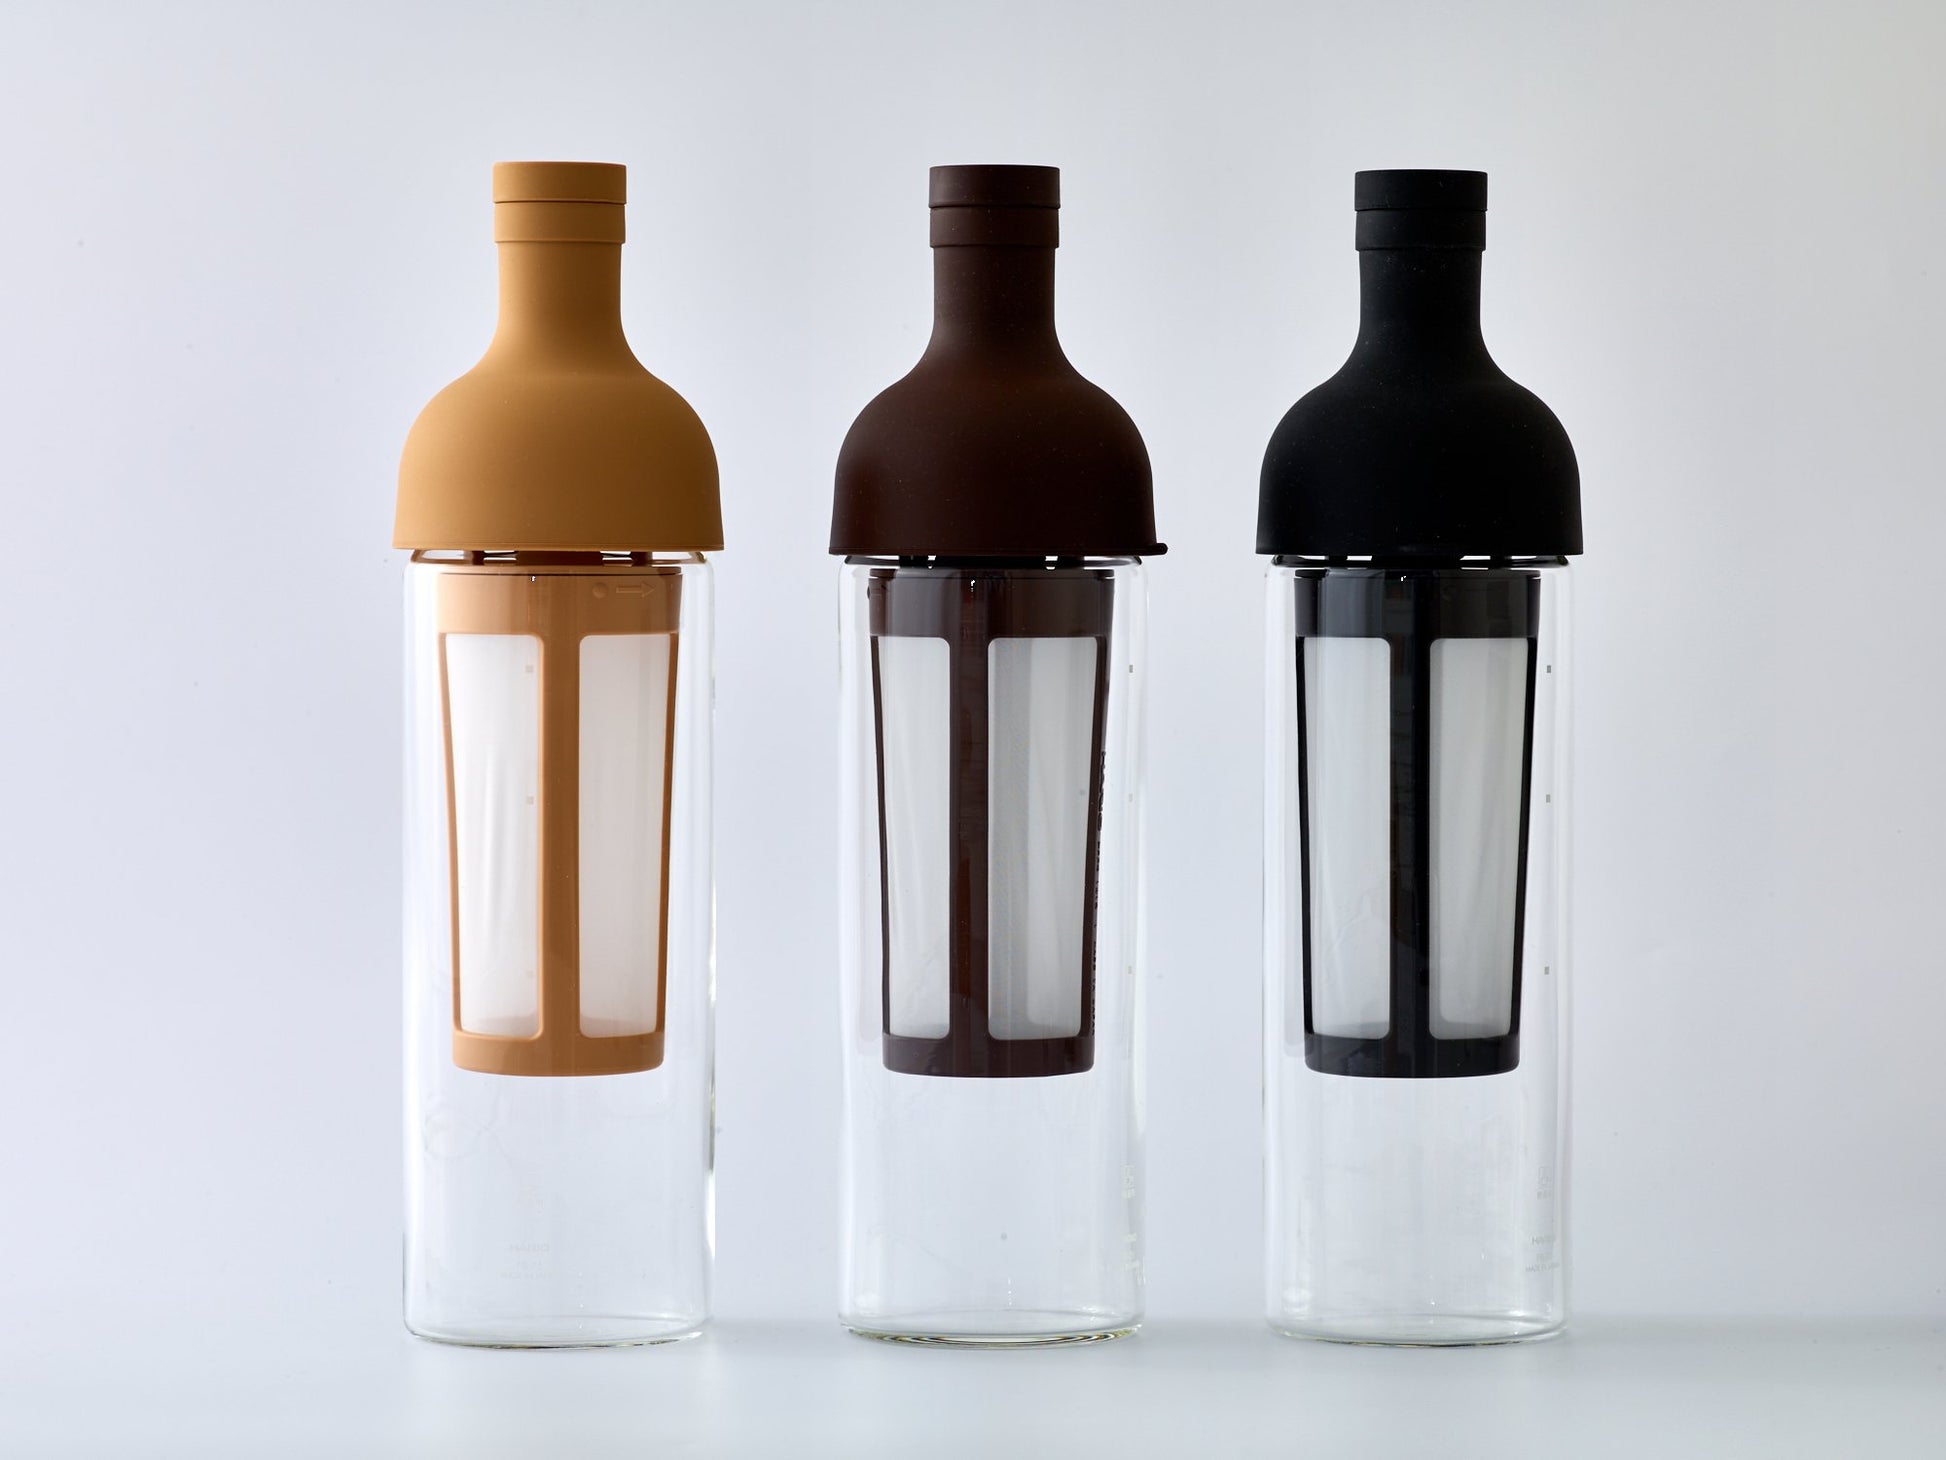 Hario Filter In Cold Brew Coffee Bottle - Kurasu